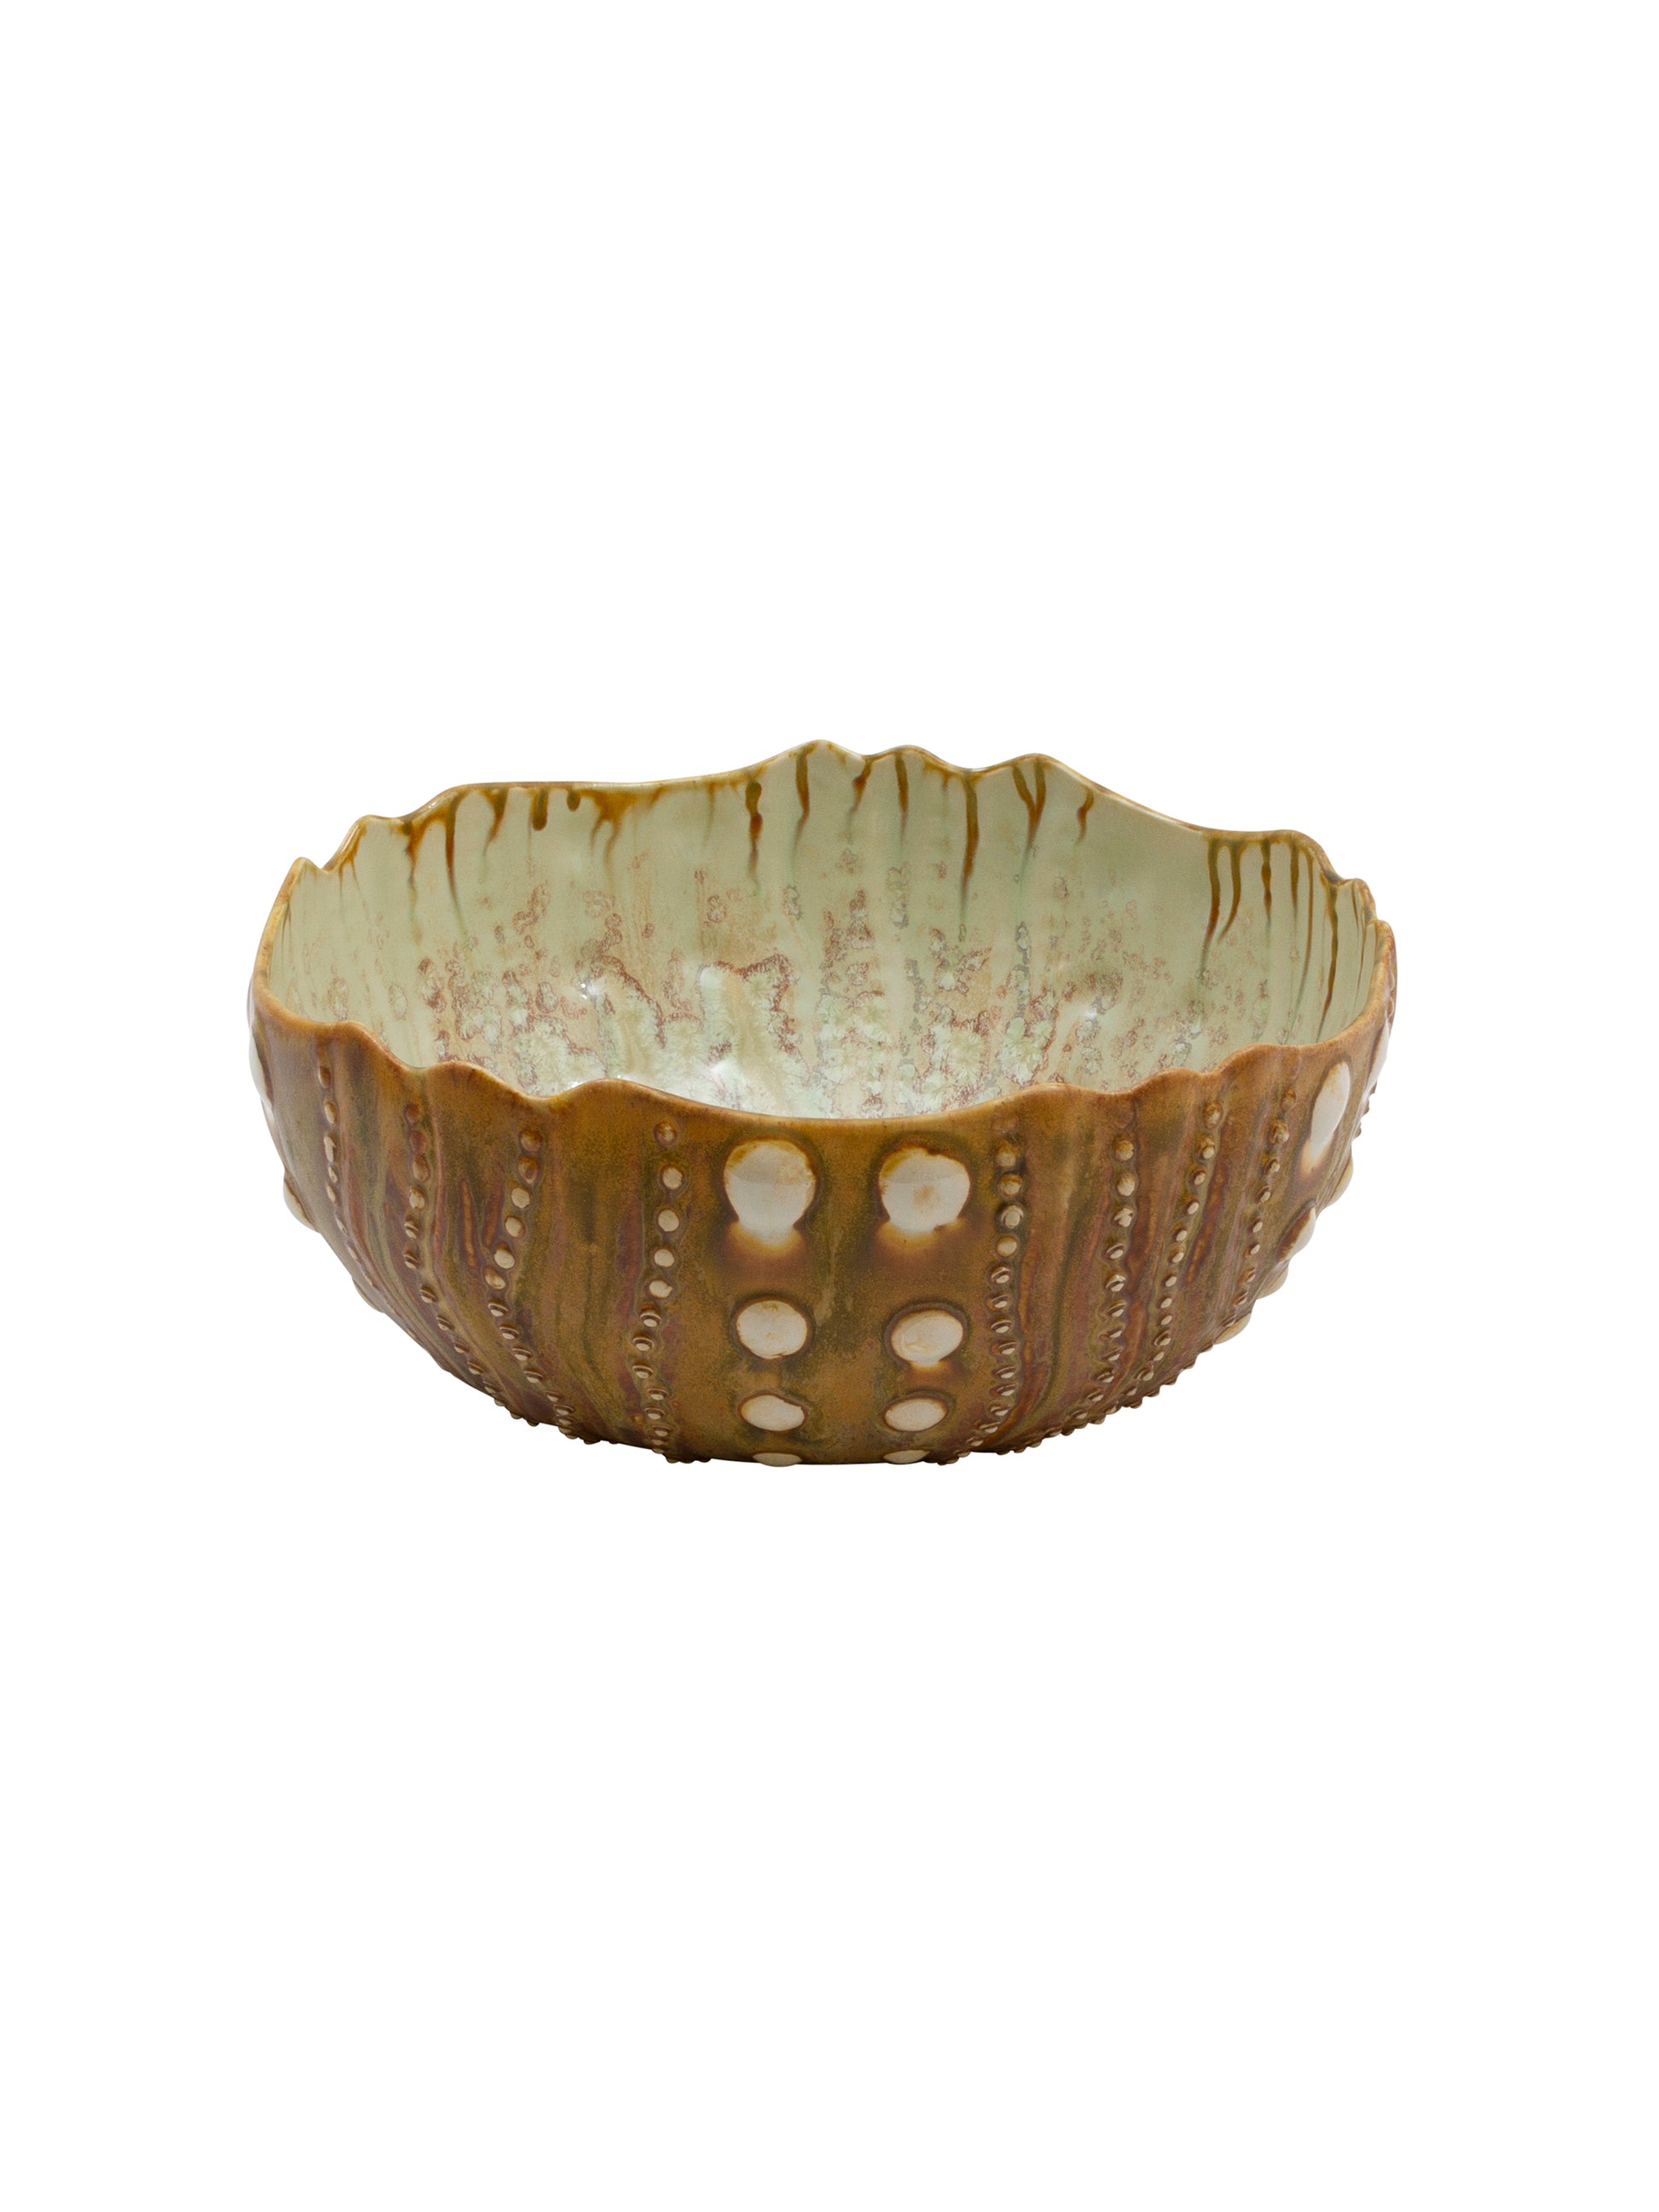 Mint Tortoise Sea Urchin Bowl Medium Weston Table